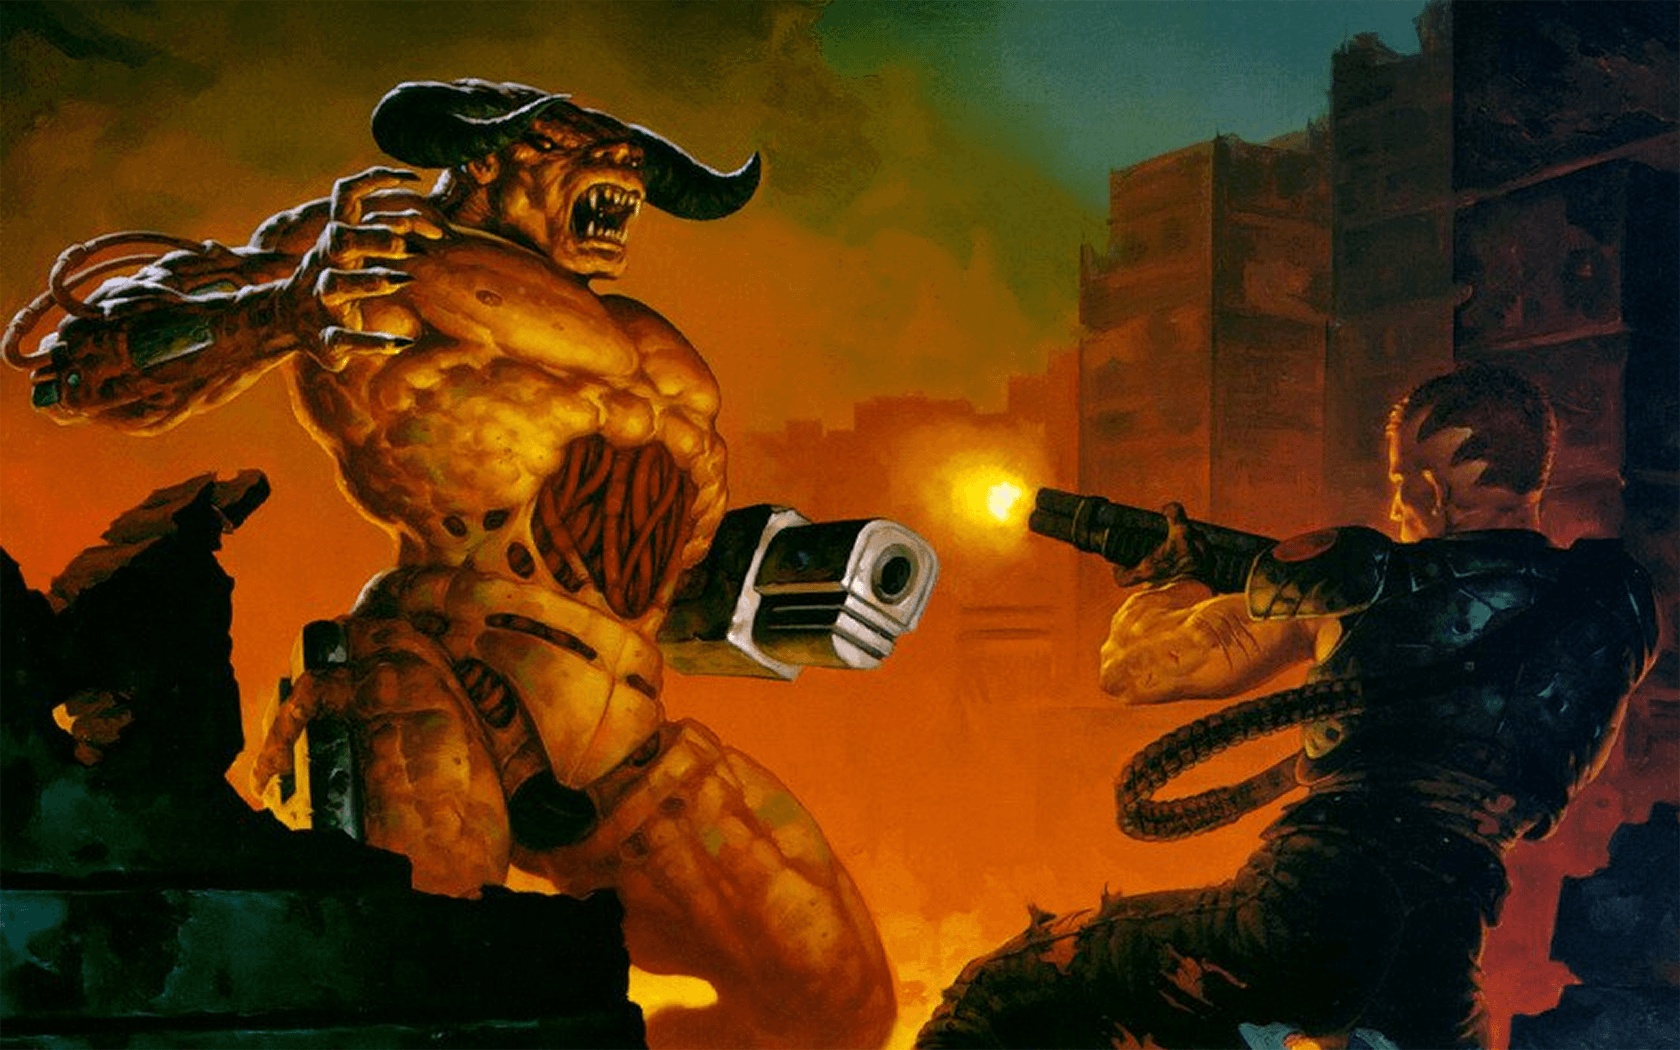 Digital Foundry: технический анализ оригинальной трилогии Doom на PS4, Xbox One и Switch